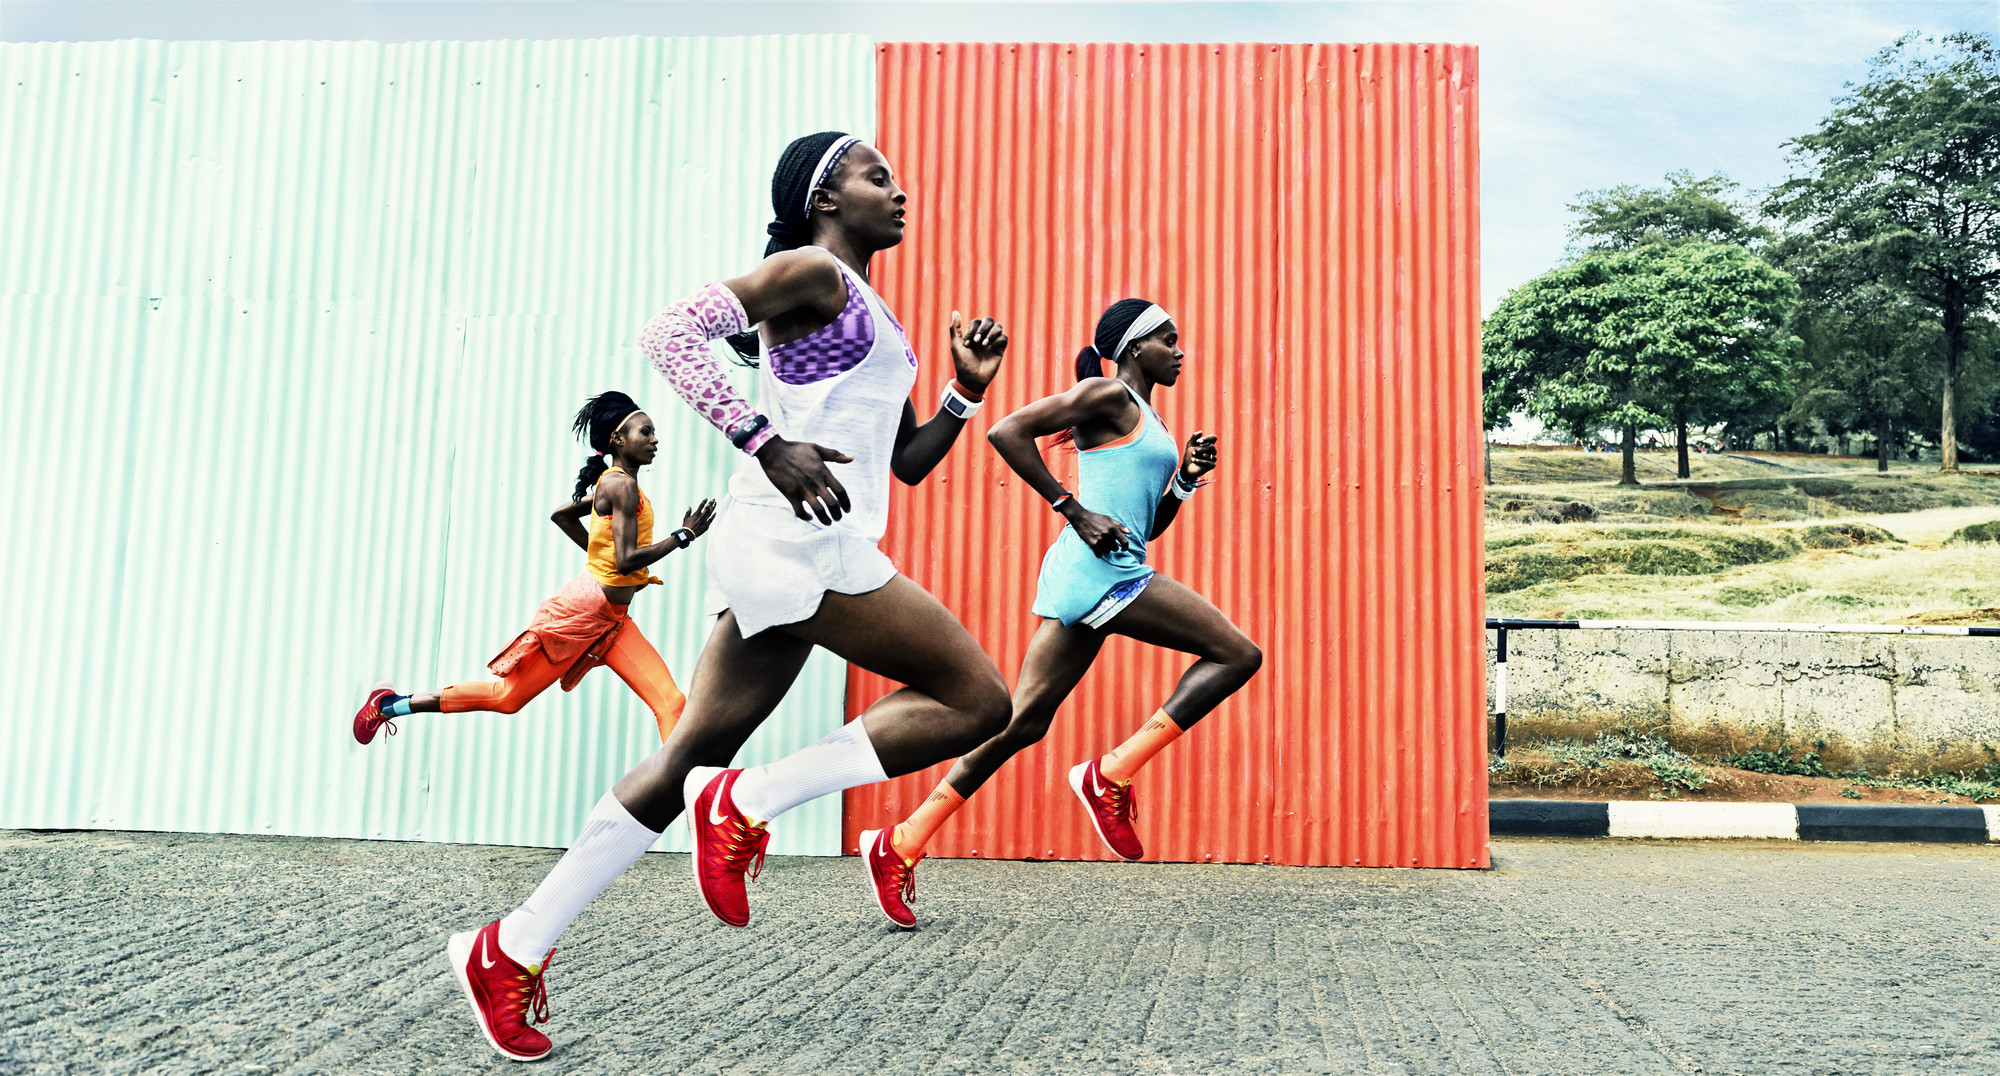 NikeFree2014_Jeptoo_Obiri_Sum_original.jpg